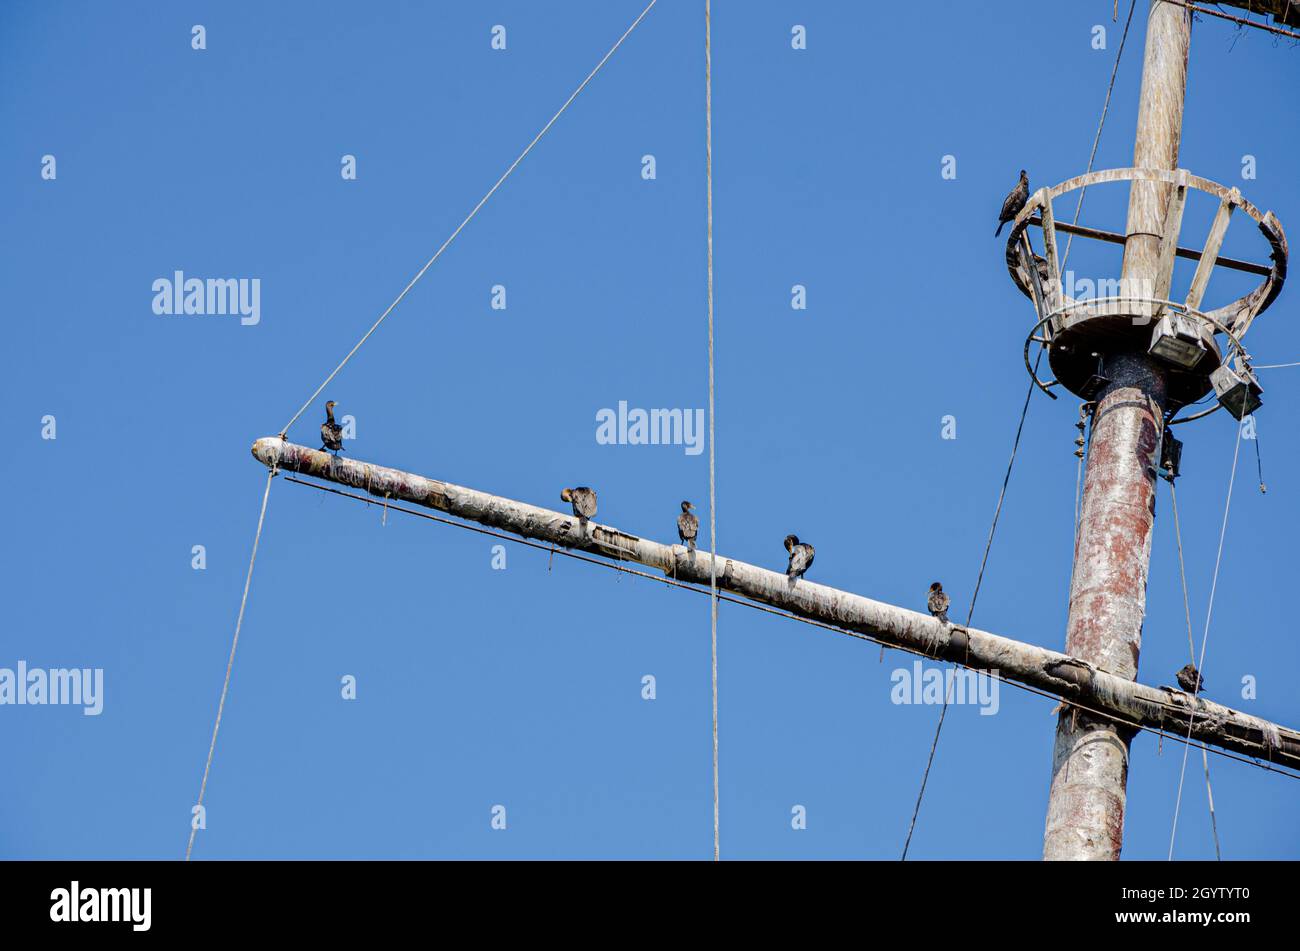 Aves Cormorán de doble cresta se reúnen en un patio de la cima del mástil de un barco Foto de stock